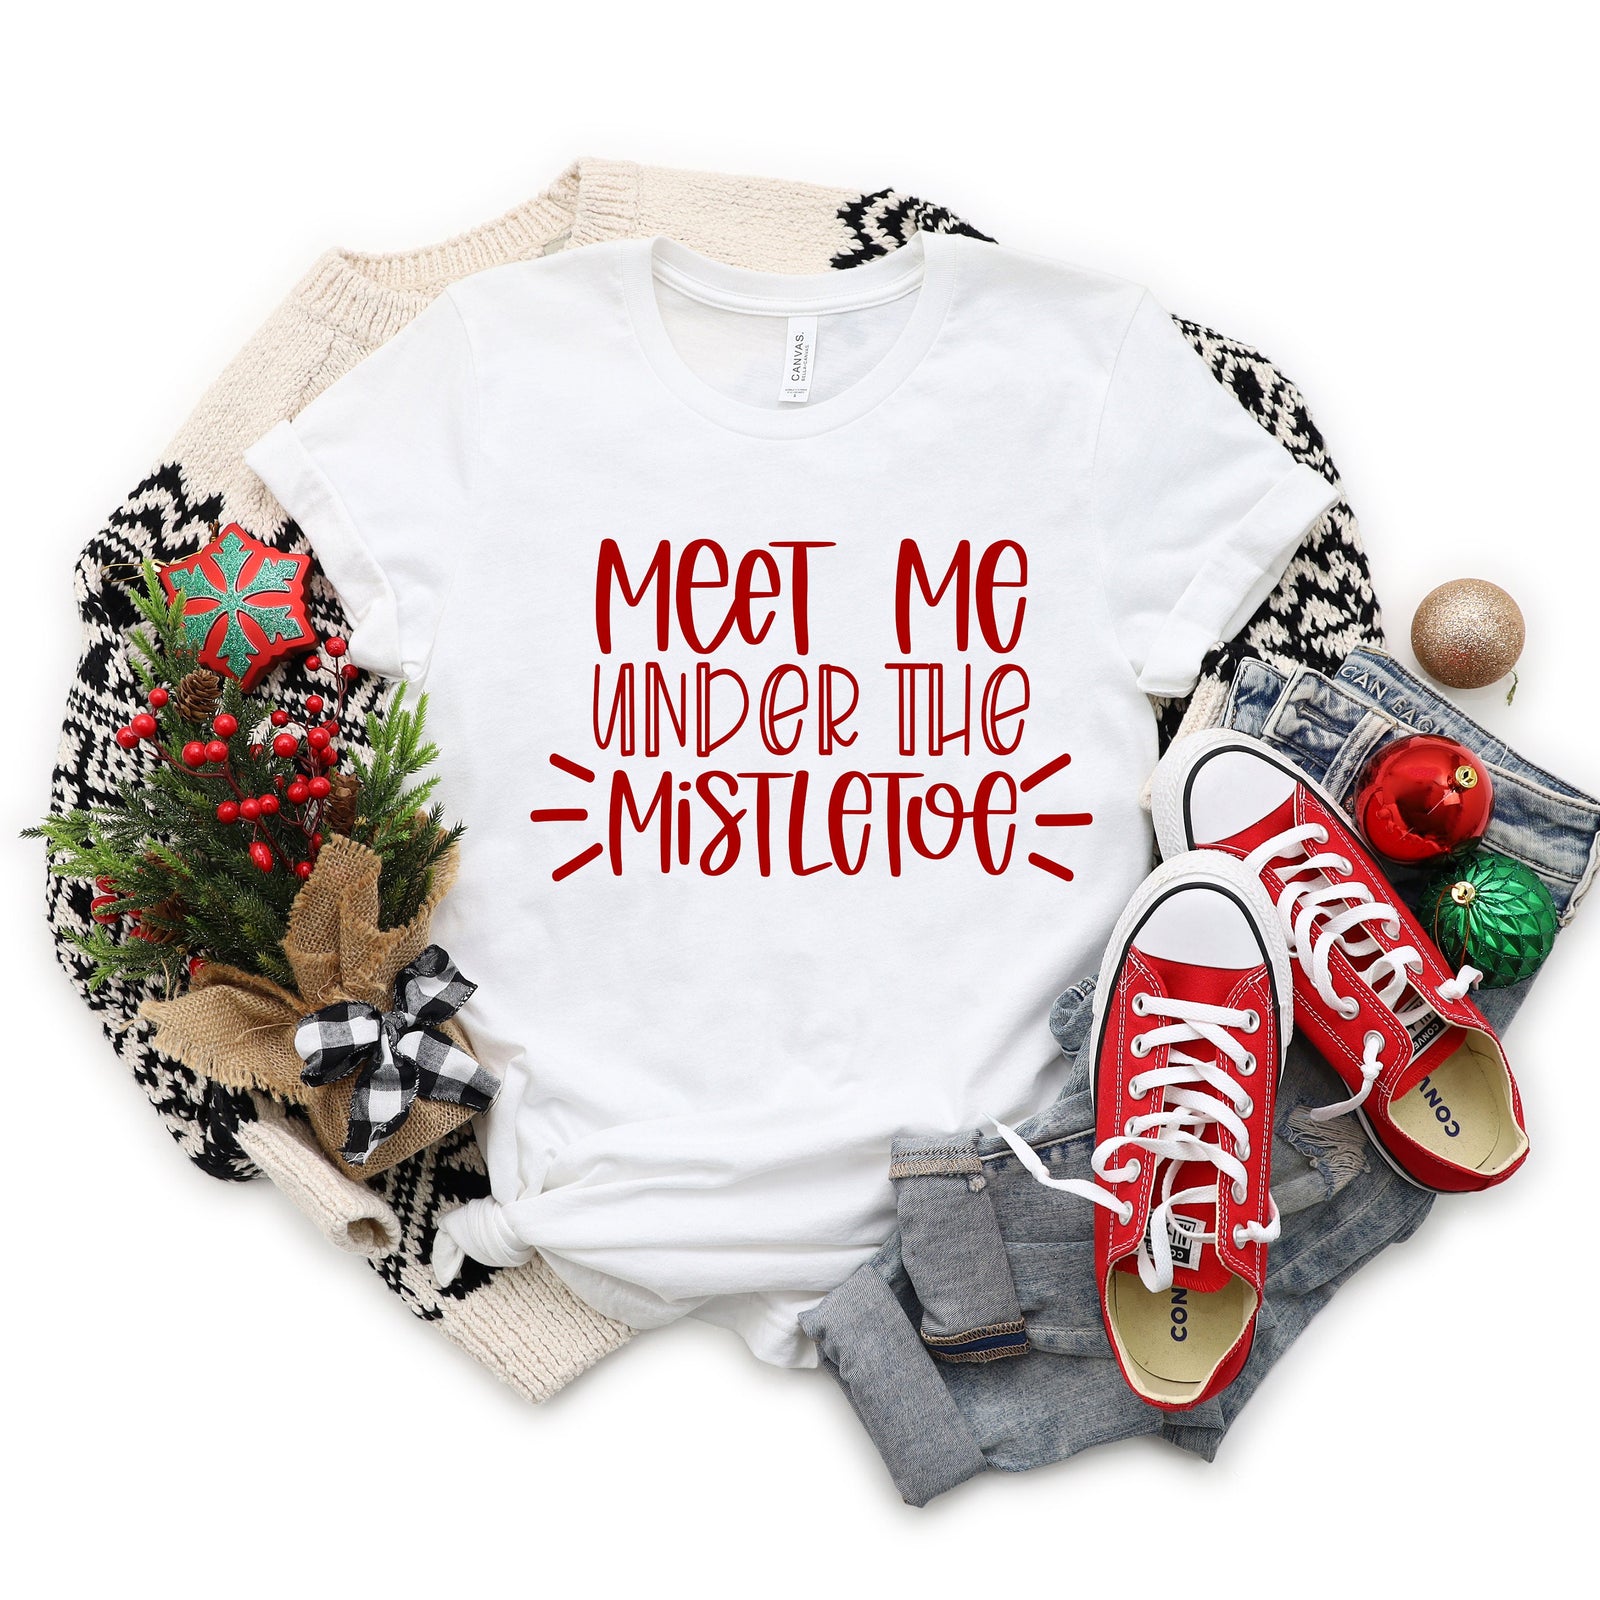 Meet Me Under the Mistle Toe Christmas T-Shirt - X-Mas T Shirt - Funny Holiday Shirt - Christmas Graphic Tee